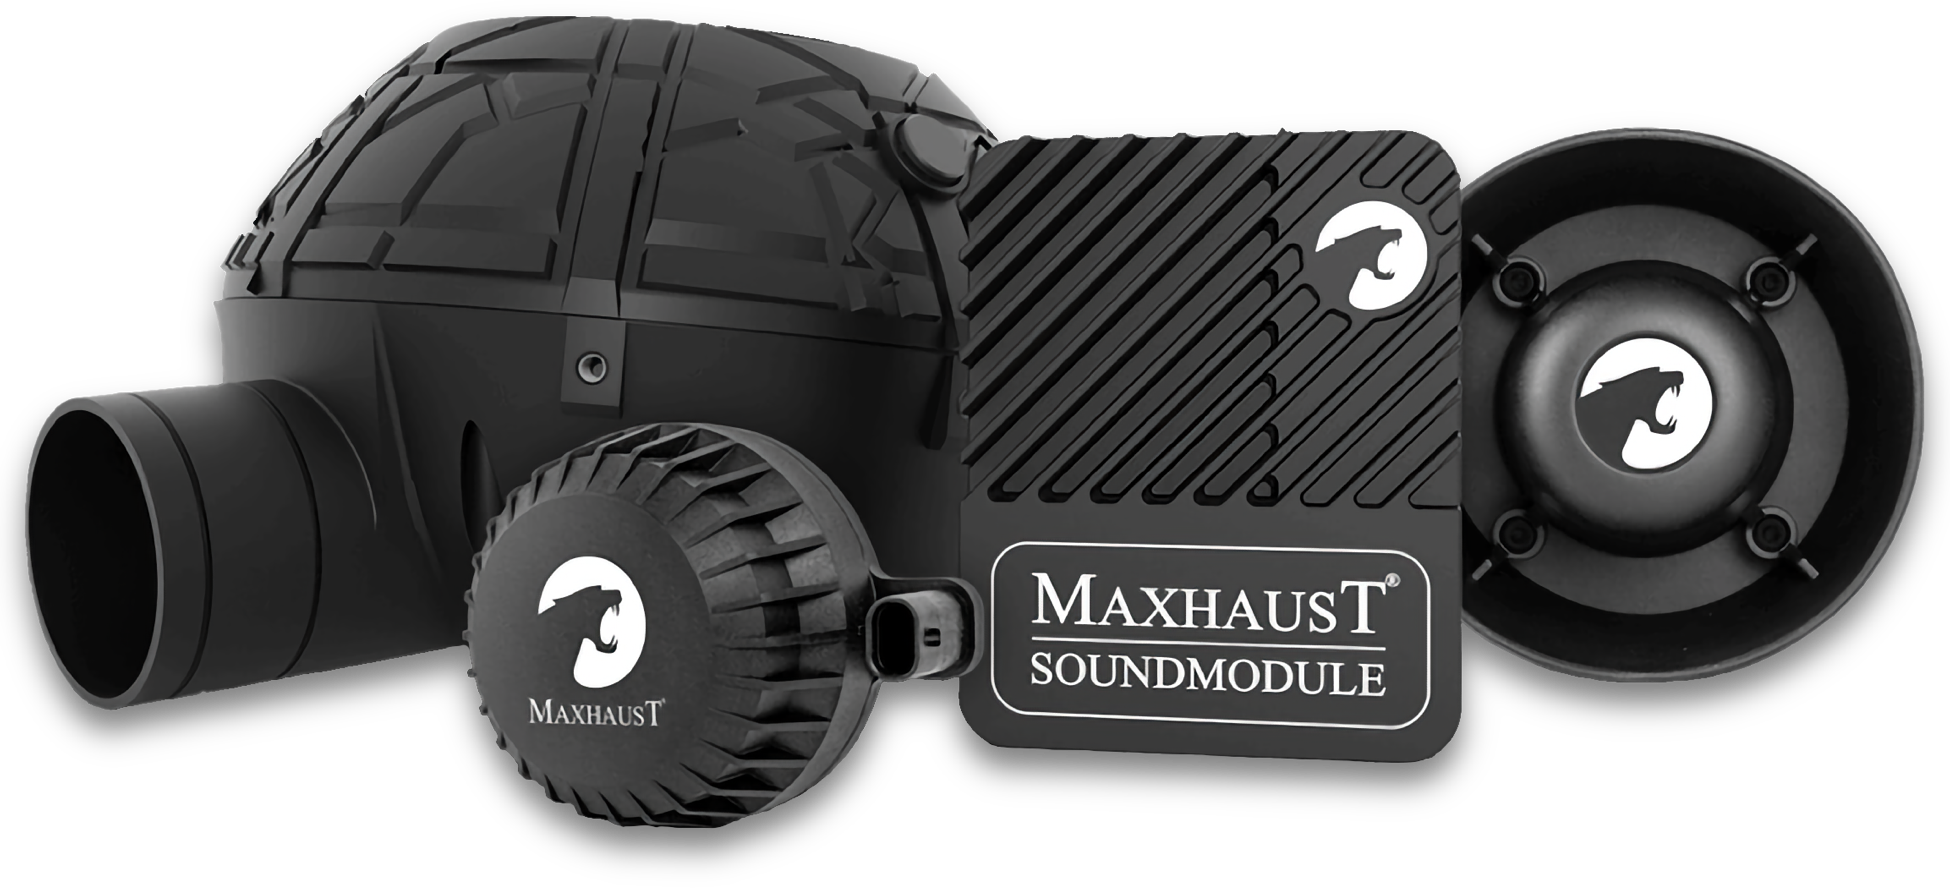 Maxhaust sound module